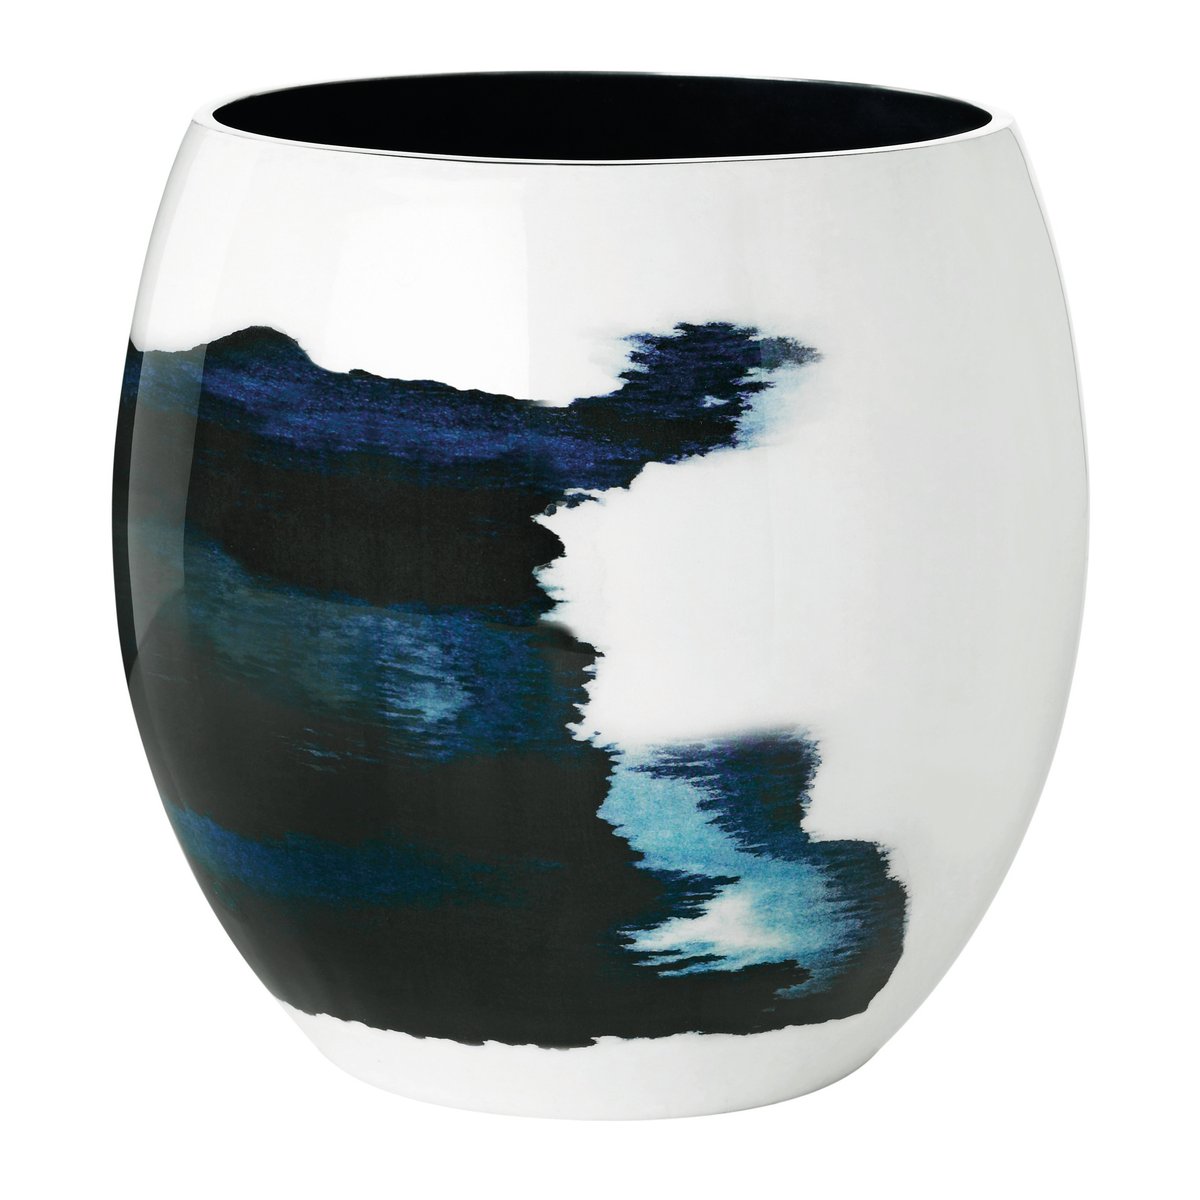 Stelton Stelton – Stockholm Aquatic vase Ø 20,3 cm